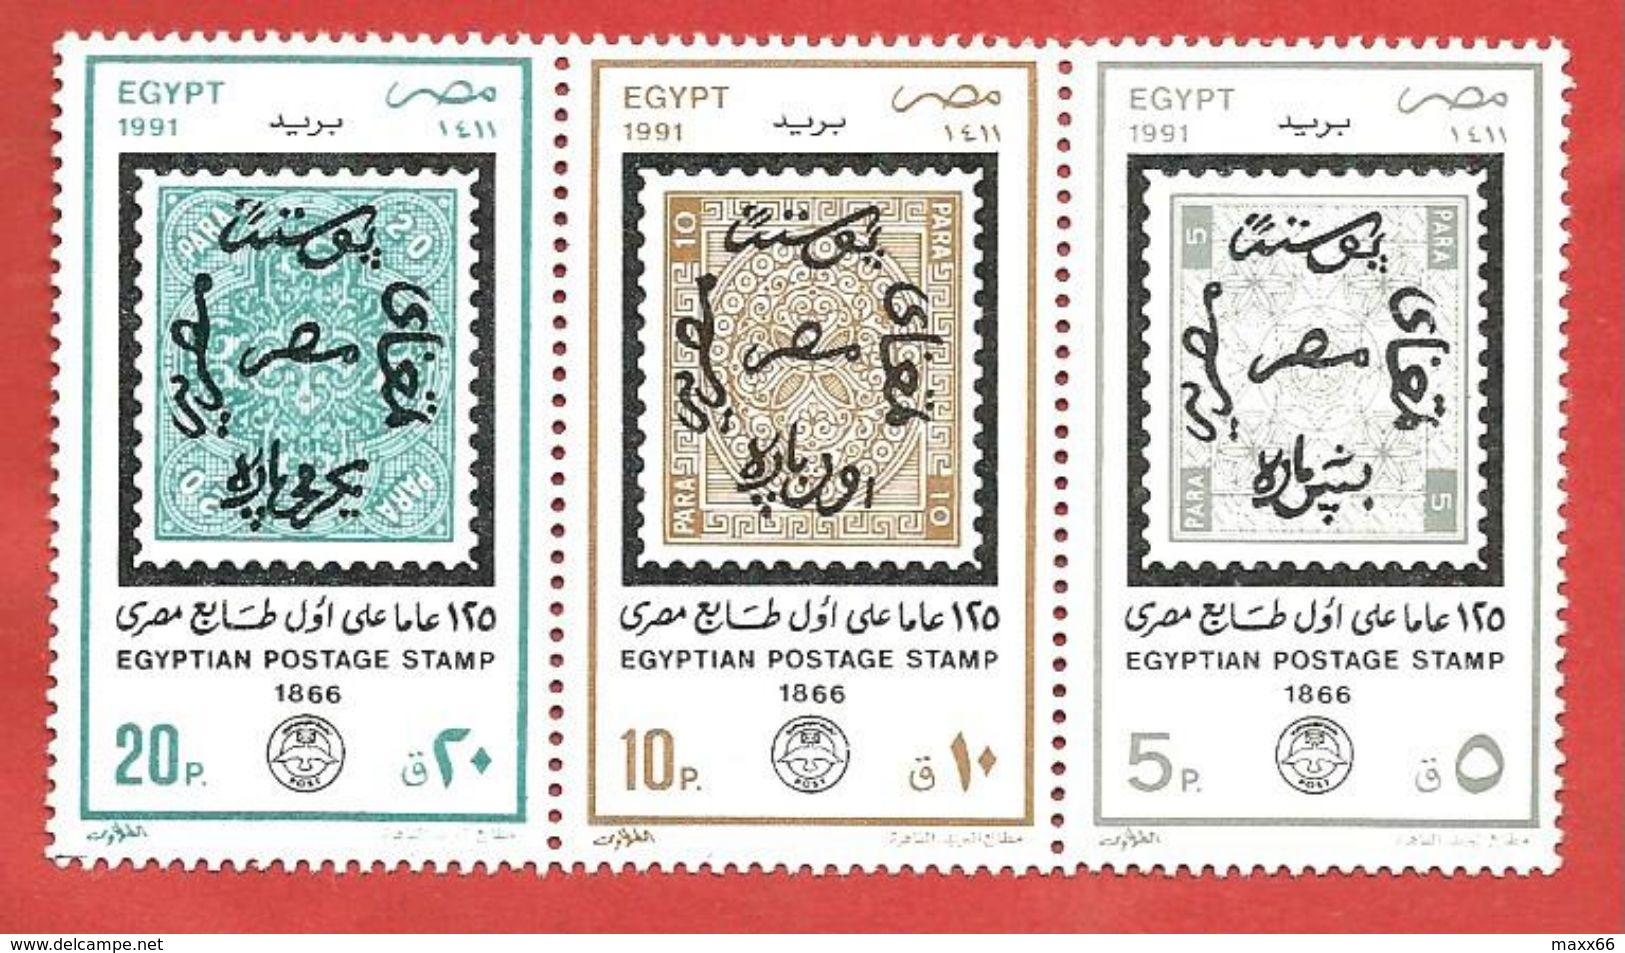 EGITTO EGYPT MNH - 1991 125th Anniversary Of First Egyptian Stamps - 5 + 10 + 20 Piastre - Michel AR EG 1697 - 1699 - Nuovi